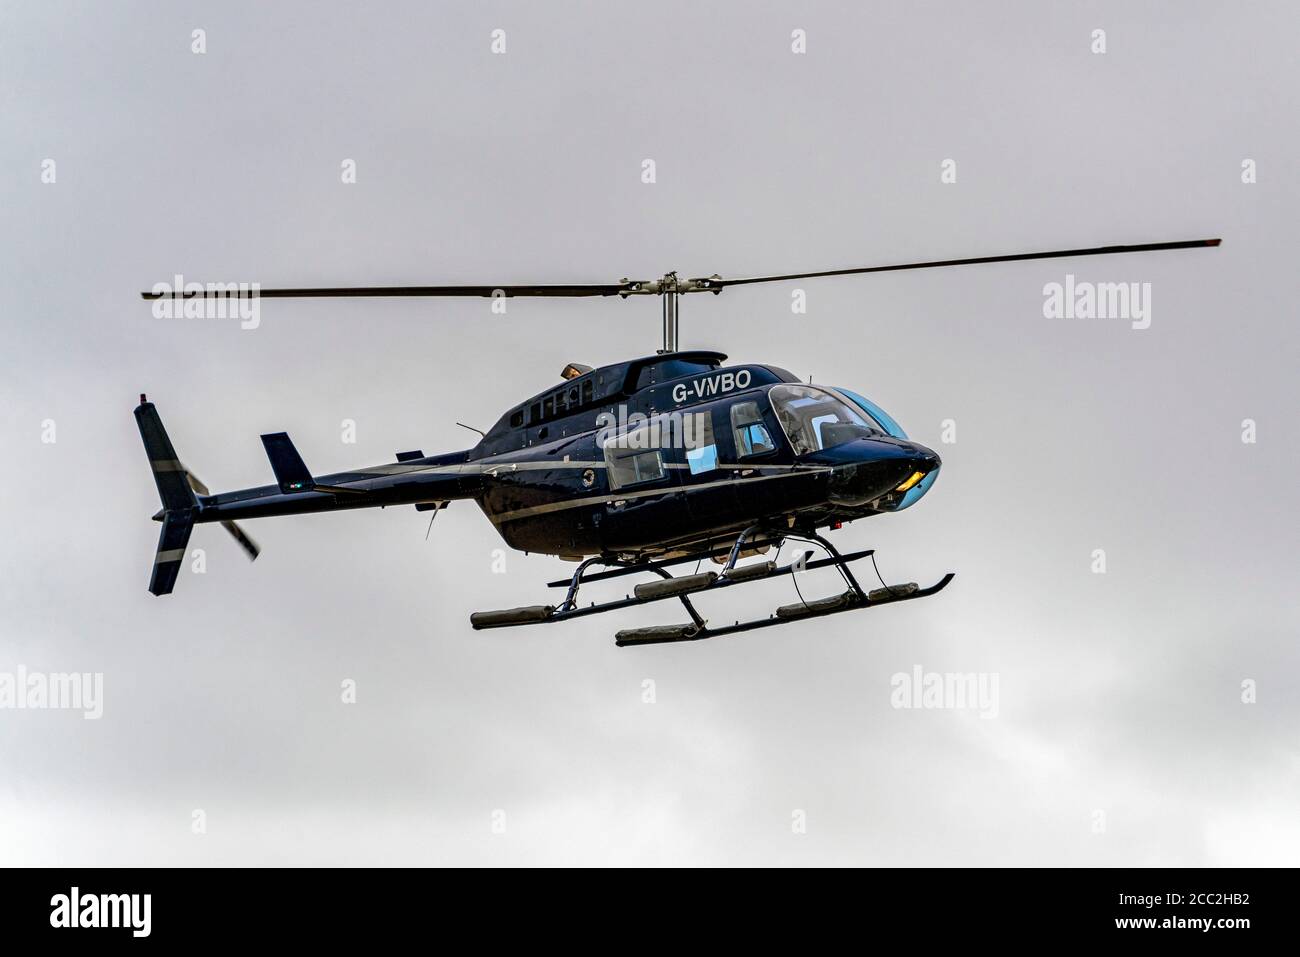 Primer plano horizontal de un helicóptero Bell 206 que llega a tierra. Foto de stock